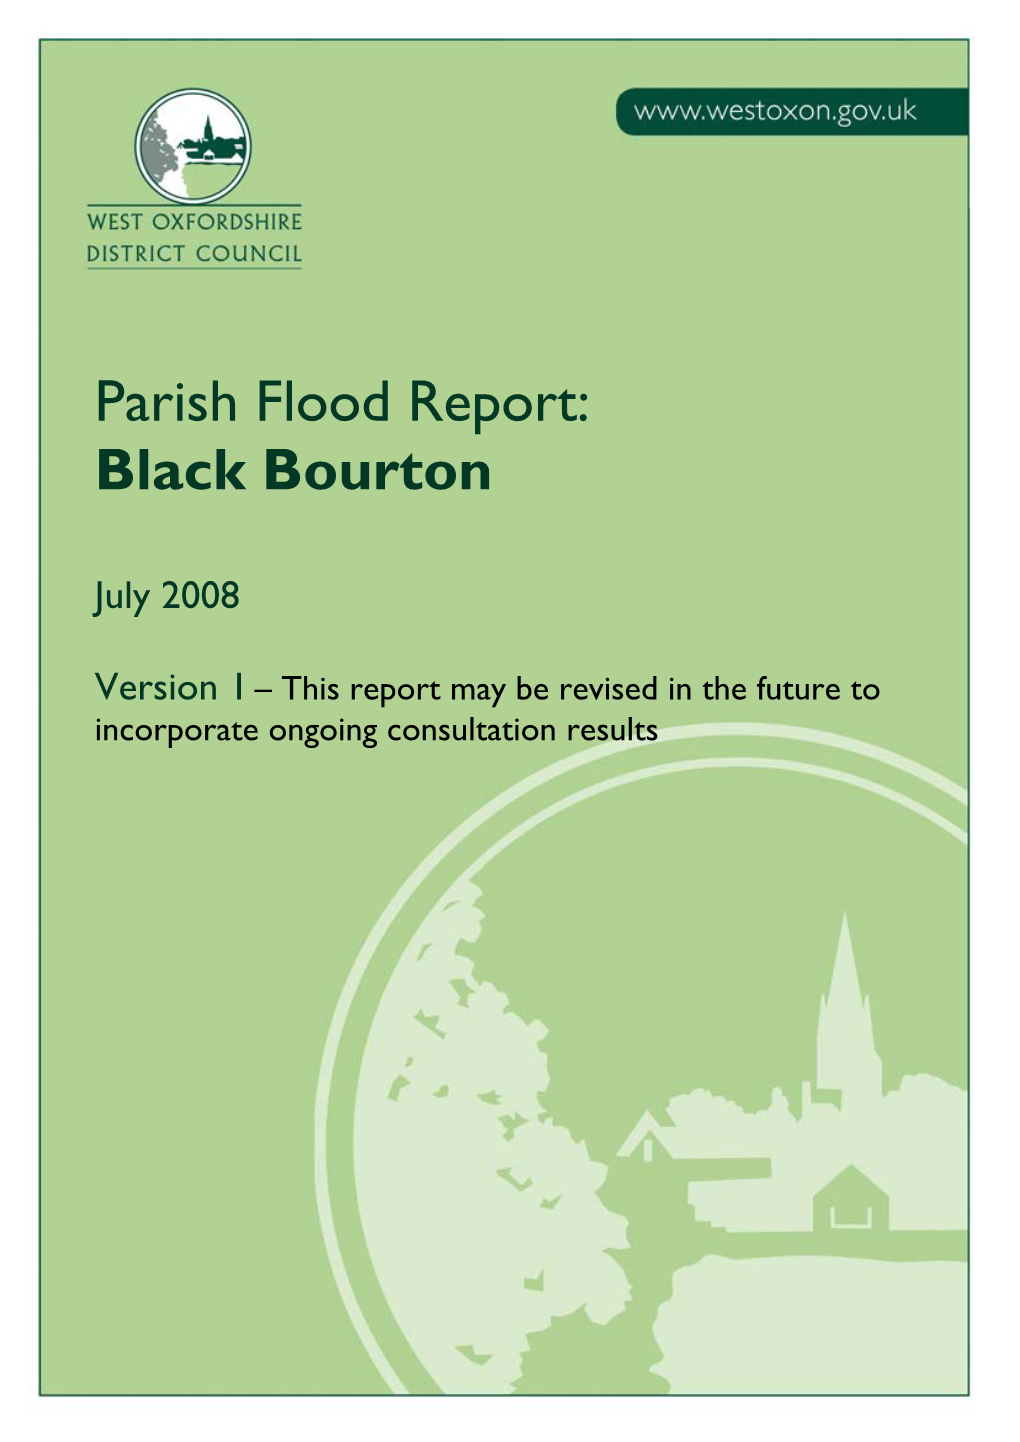 Black Bourton Flood Report